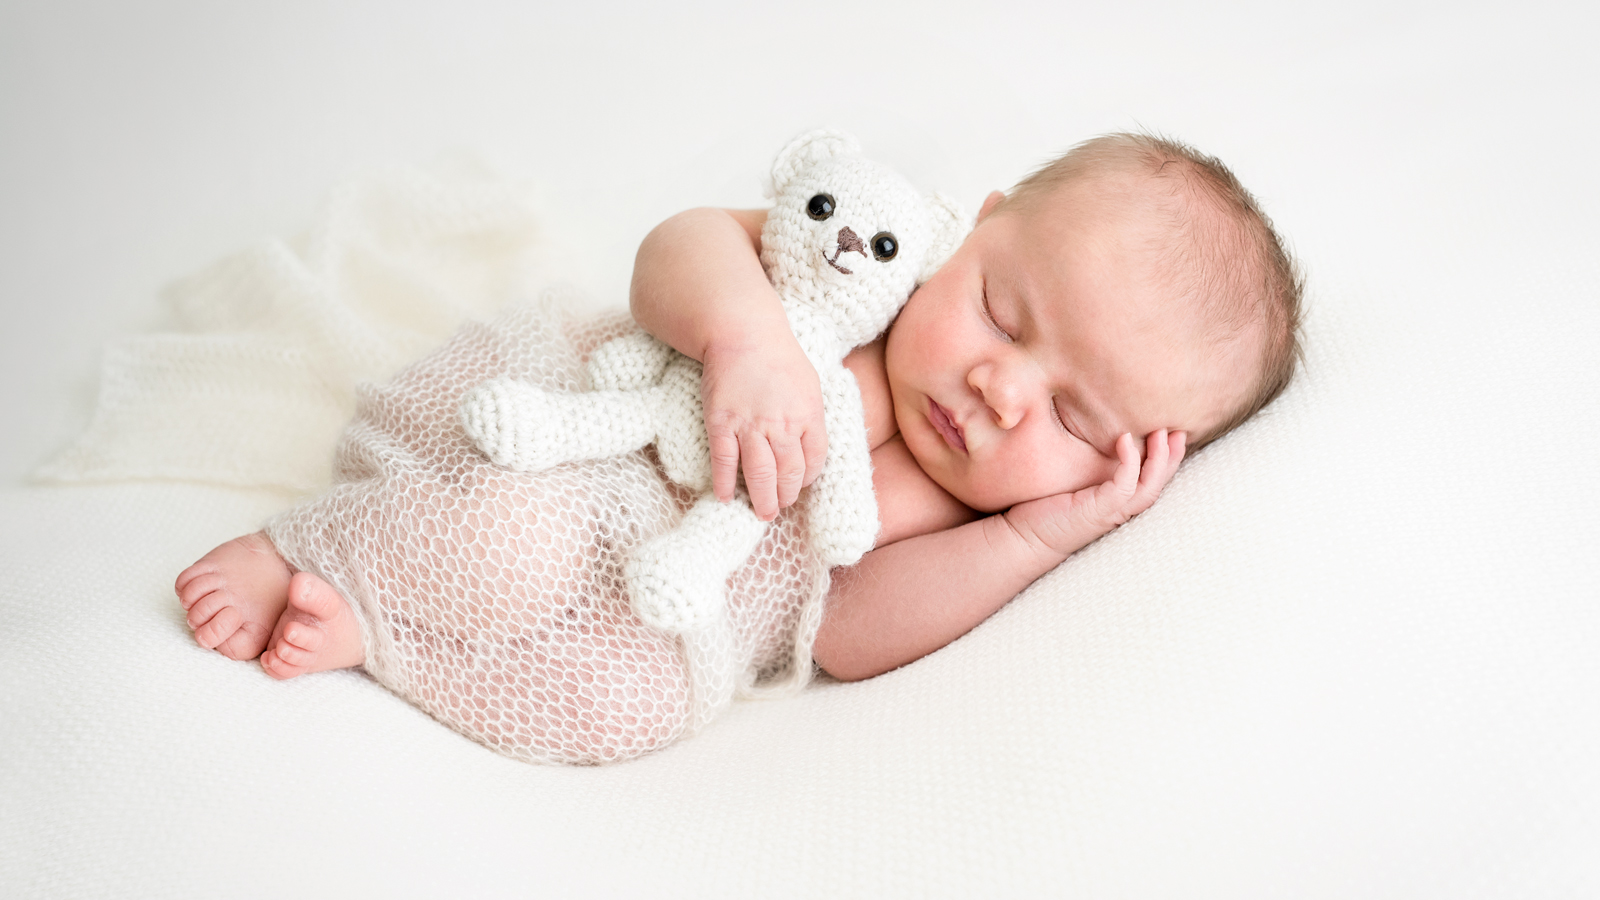 A photograph of a sleeping newborn baby cuddling a soft toy taken by Jessica Loren at her studio in Brisbane.